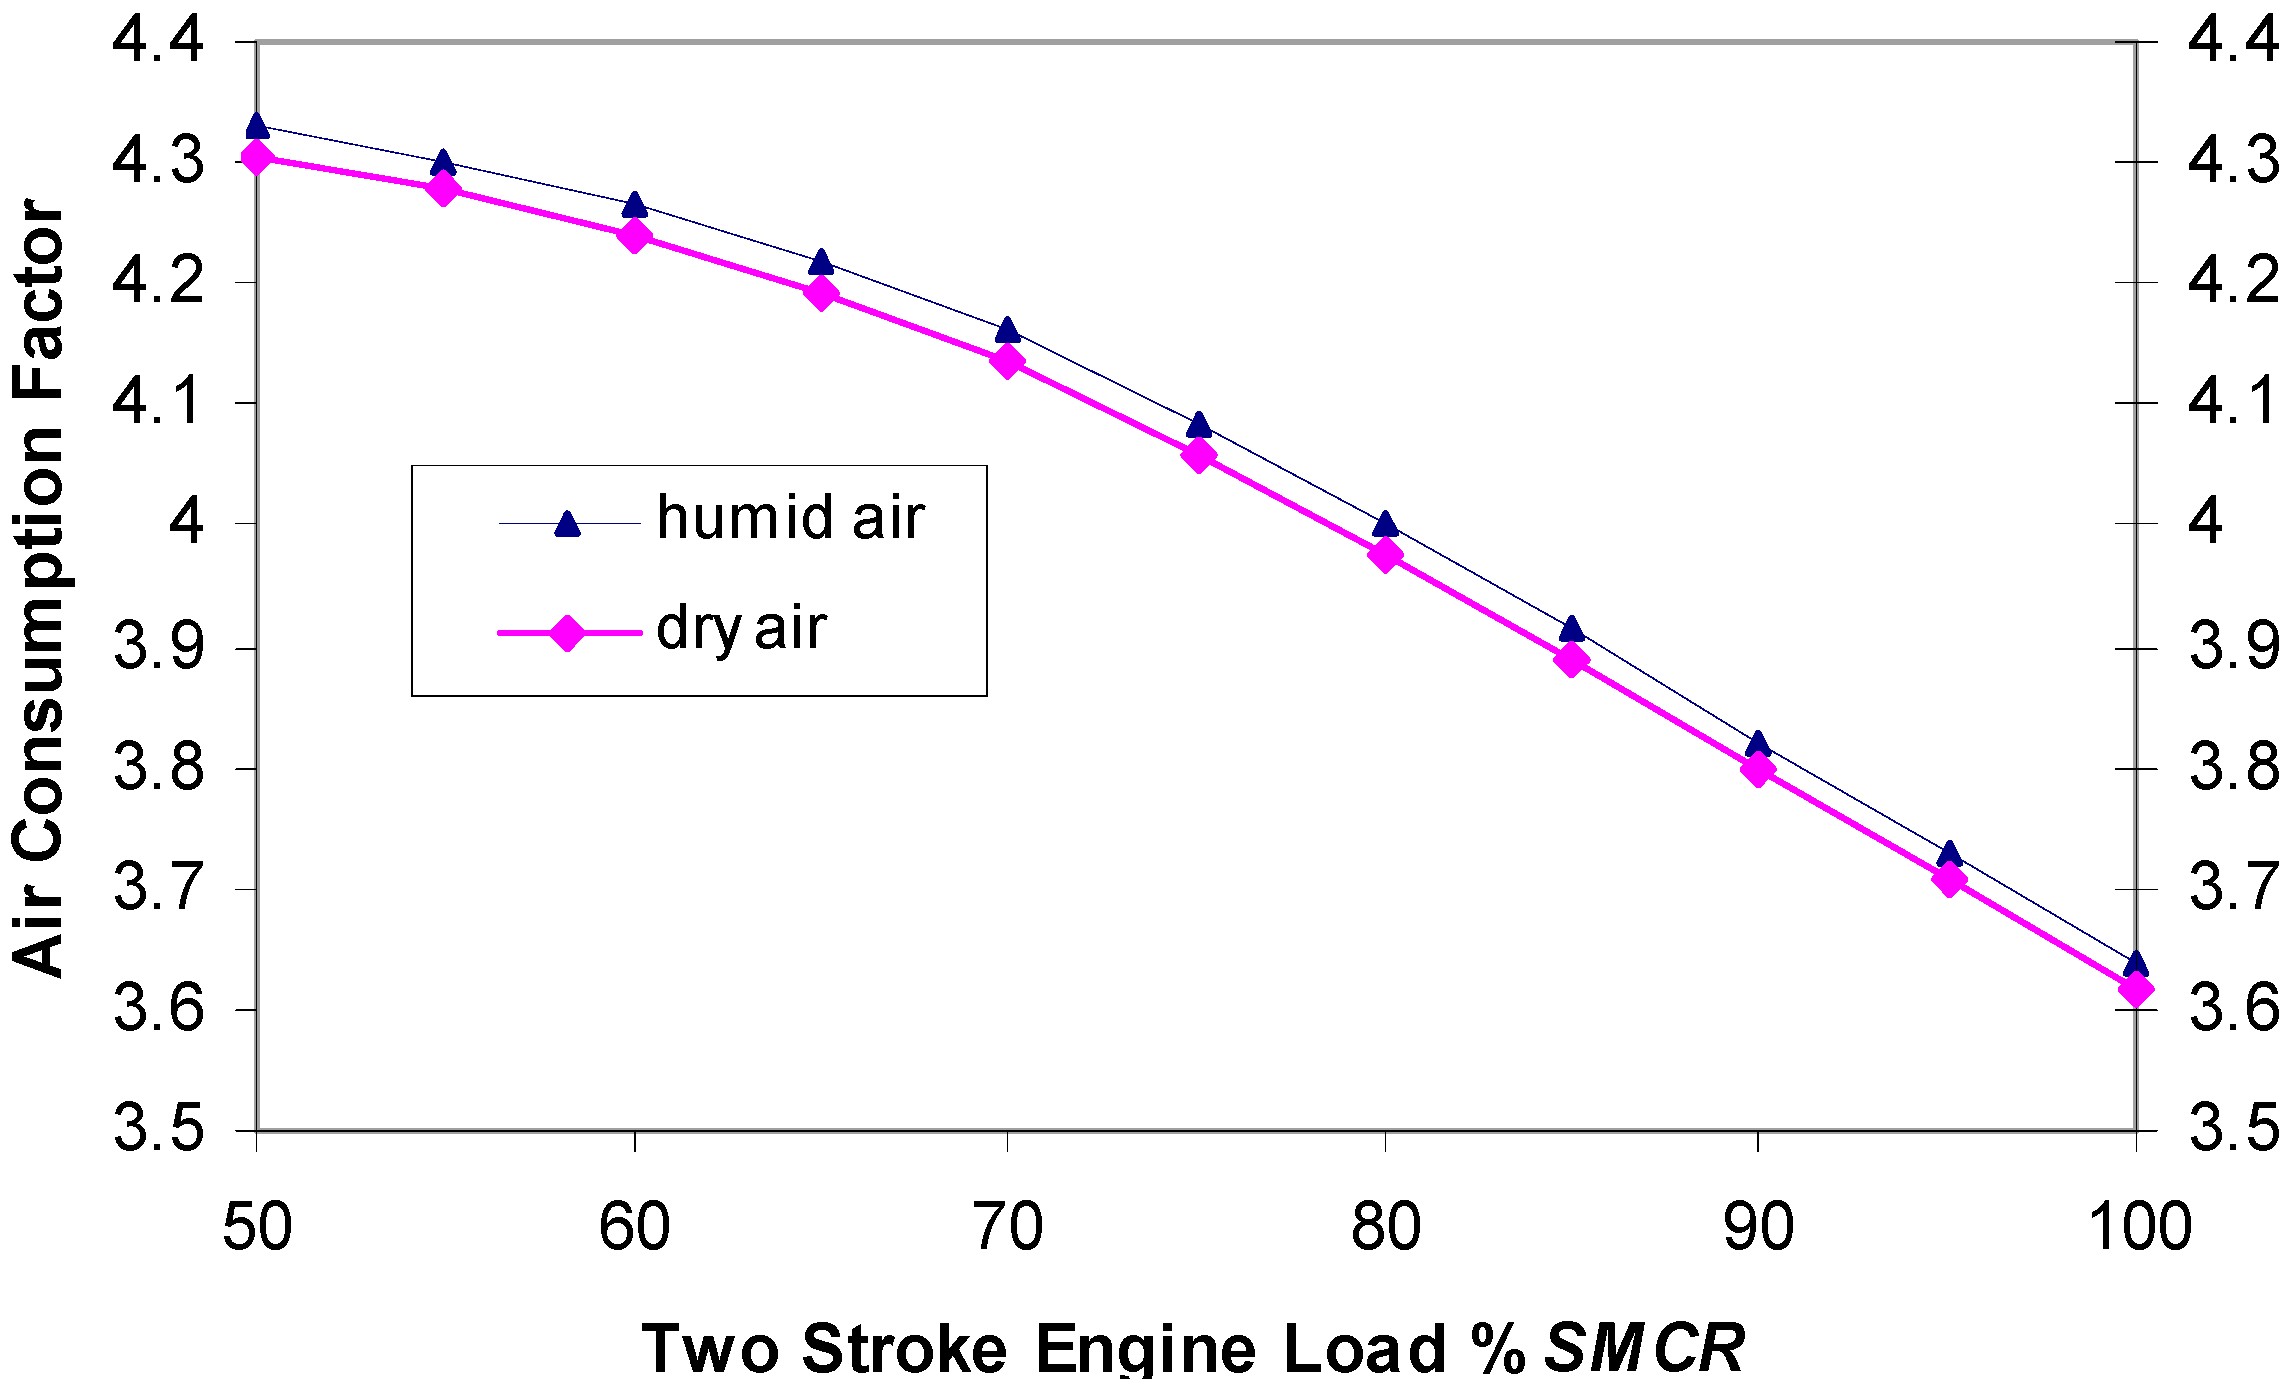 Valve Timing Diagram Of 4 Stroke Engine Energies Free Full Text Of Valve Timing Diagram Of 4 Stroke Engine